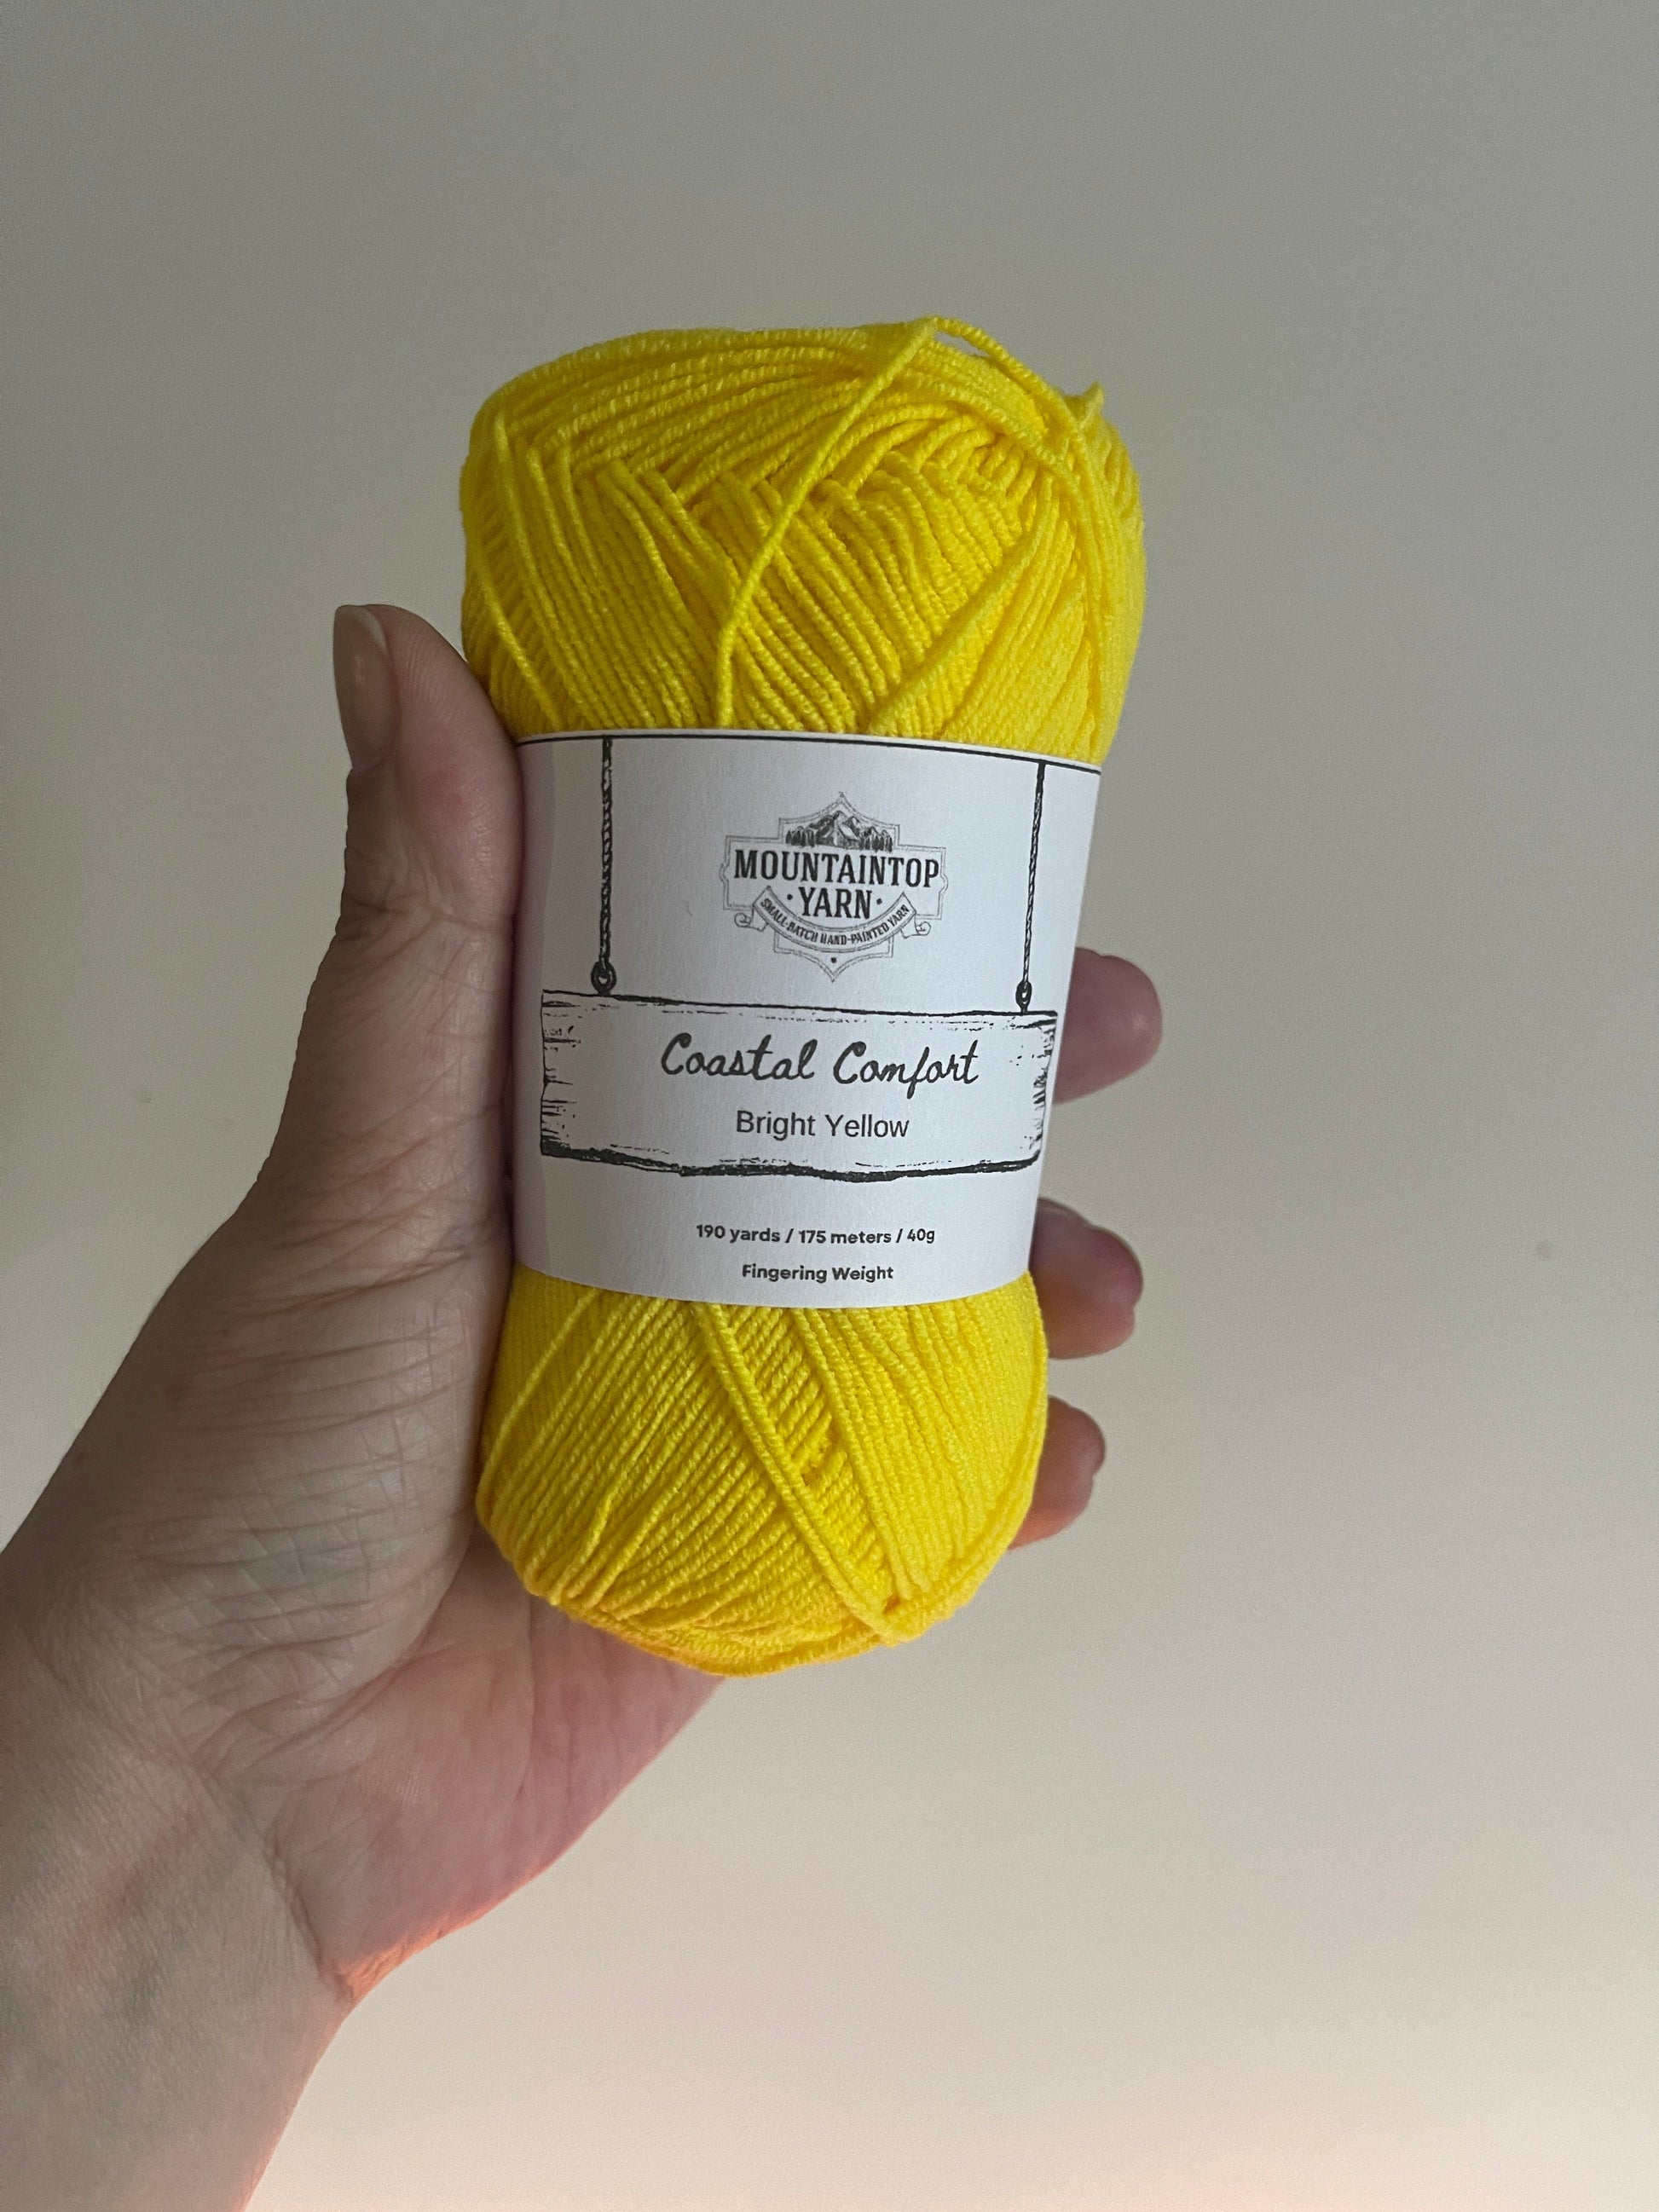 Mountaintop Yarn Bright Yellow Coastal Comfort - Cotton and Acrylic Blend Yarn Yarn